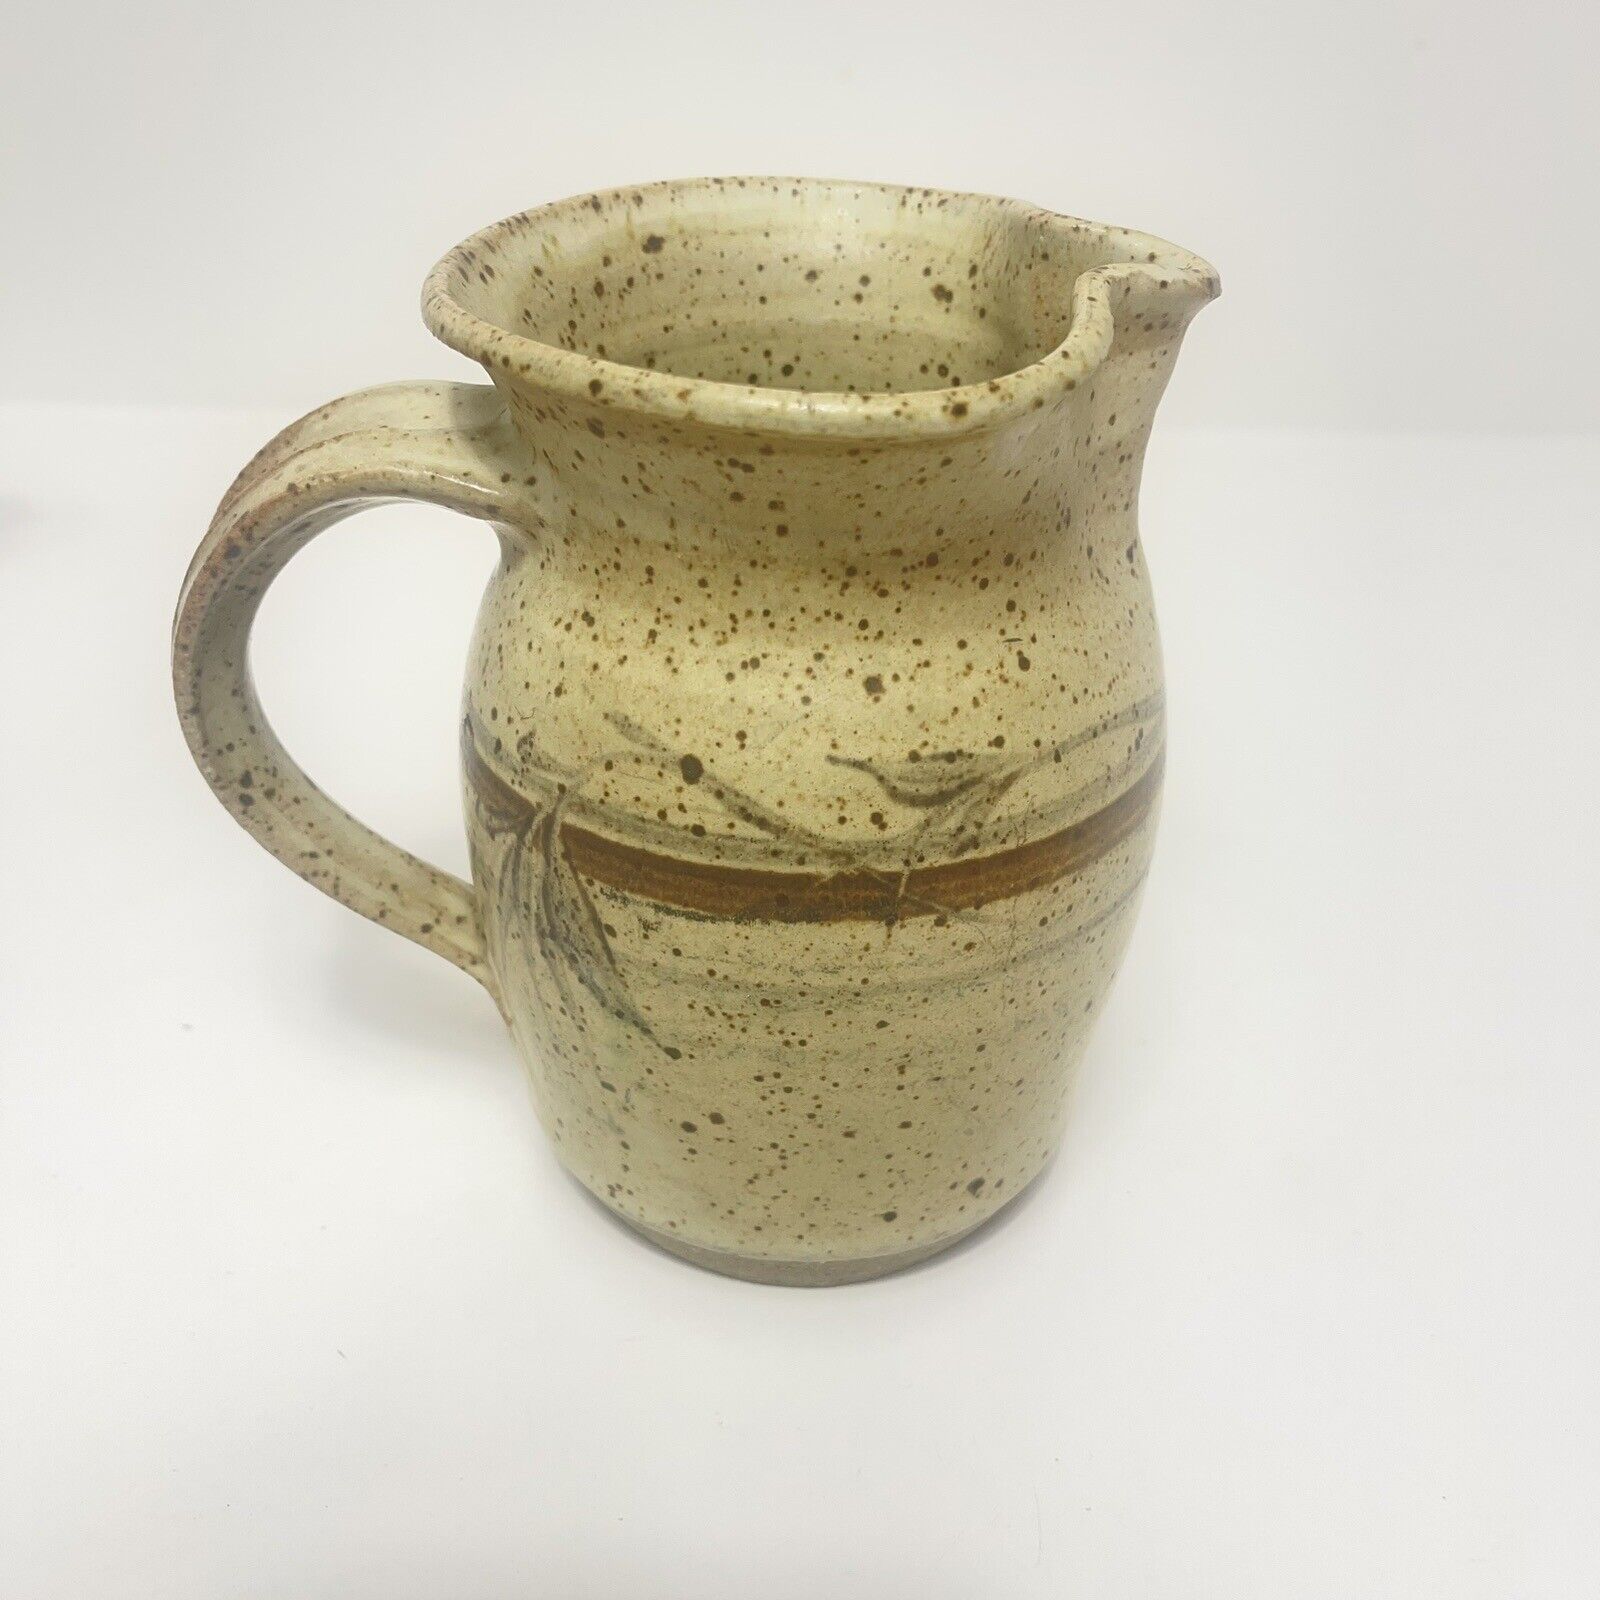 Handmade Signed Speckled Flowers Stoneware Art Pottery Pitcher Flower Vase 5.5”